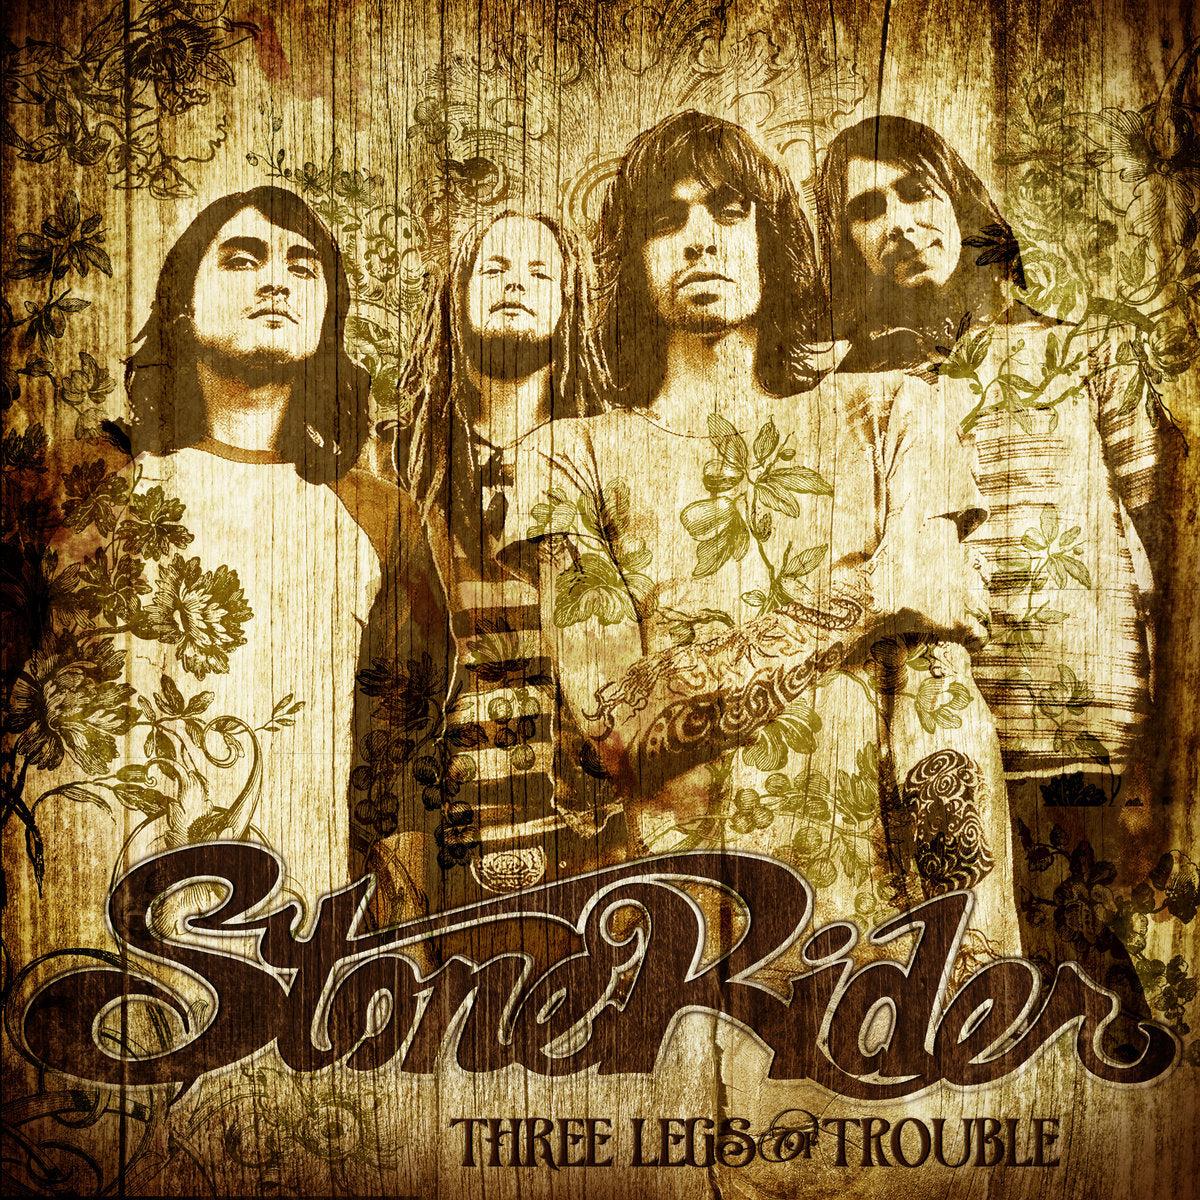 Stonerider "Three Legs of Trouble" CD